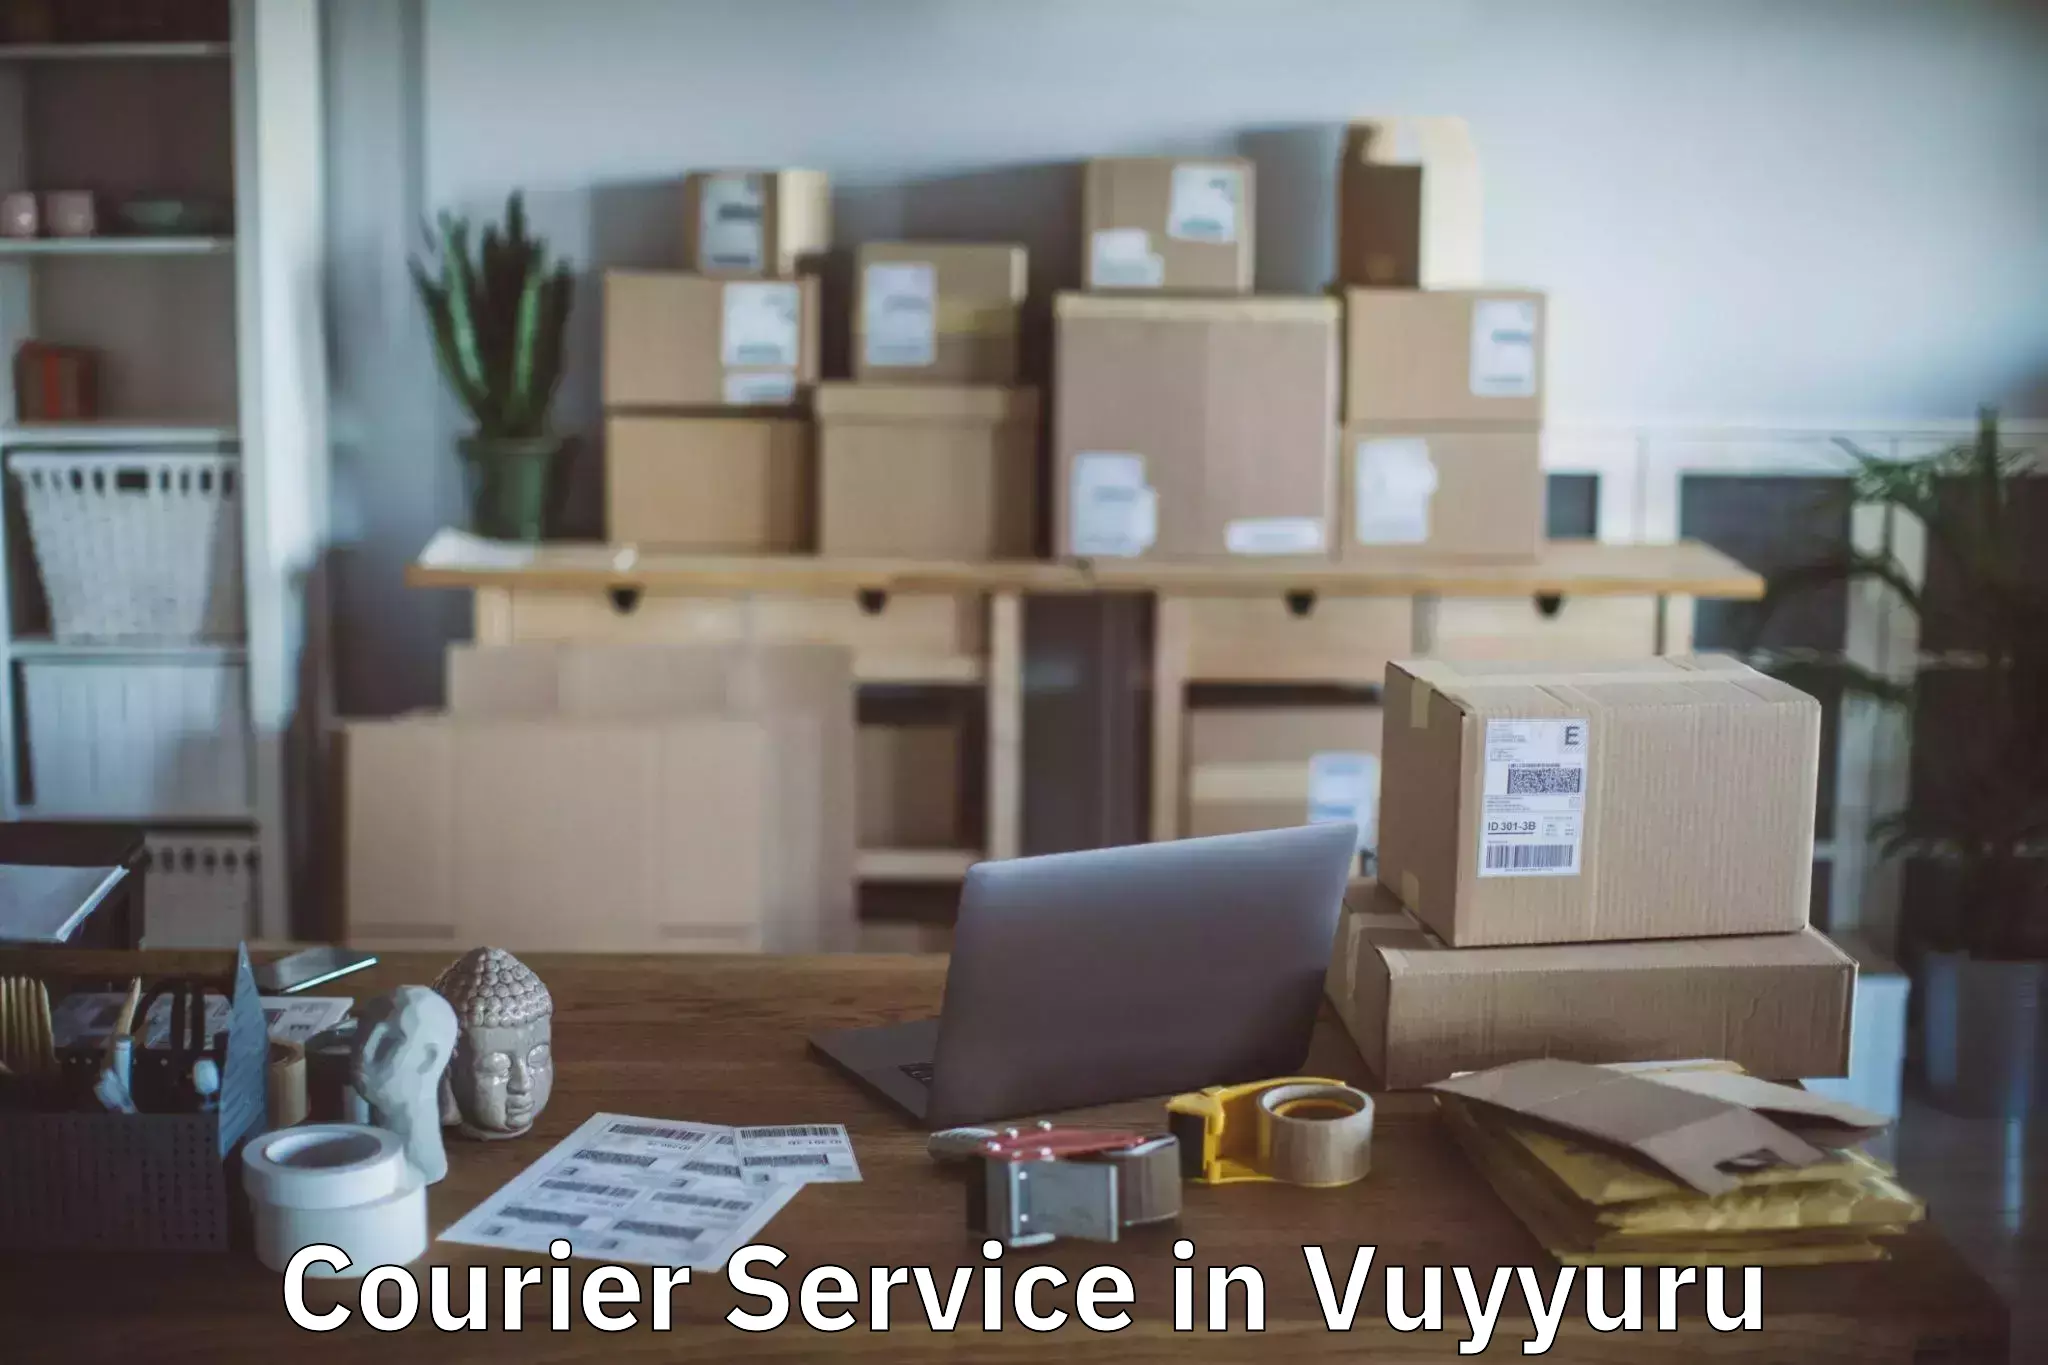 Speedy delivery service in Vuyyuru